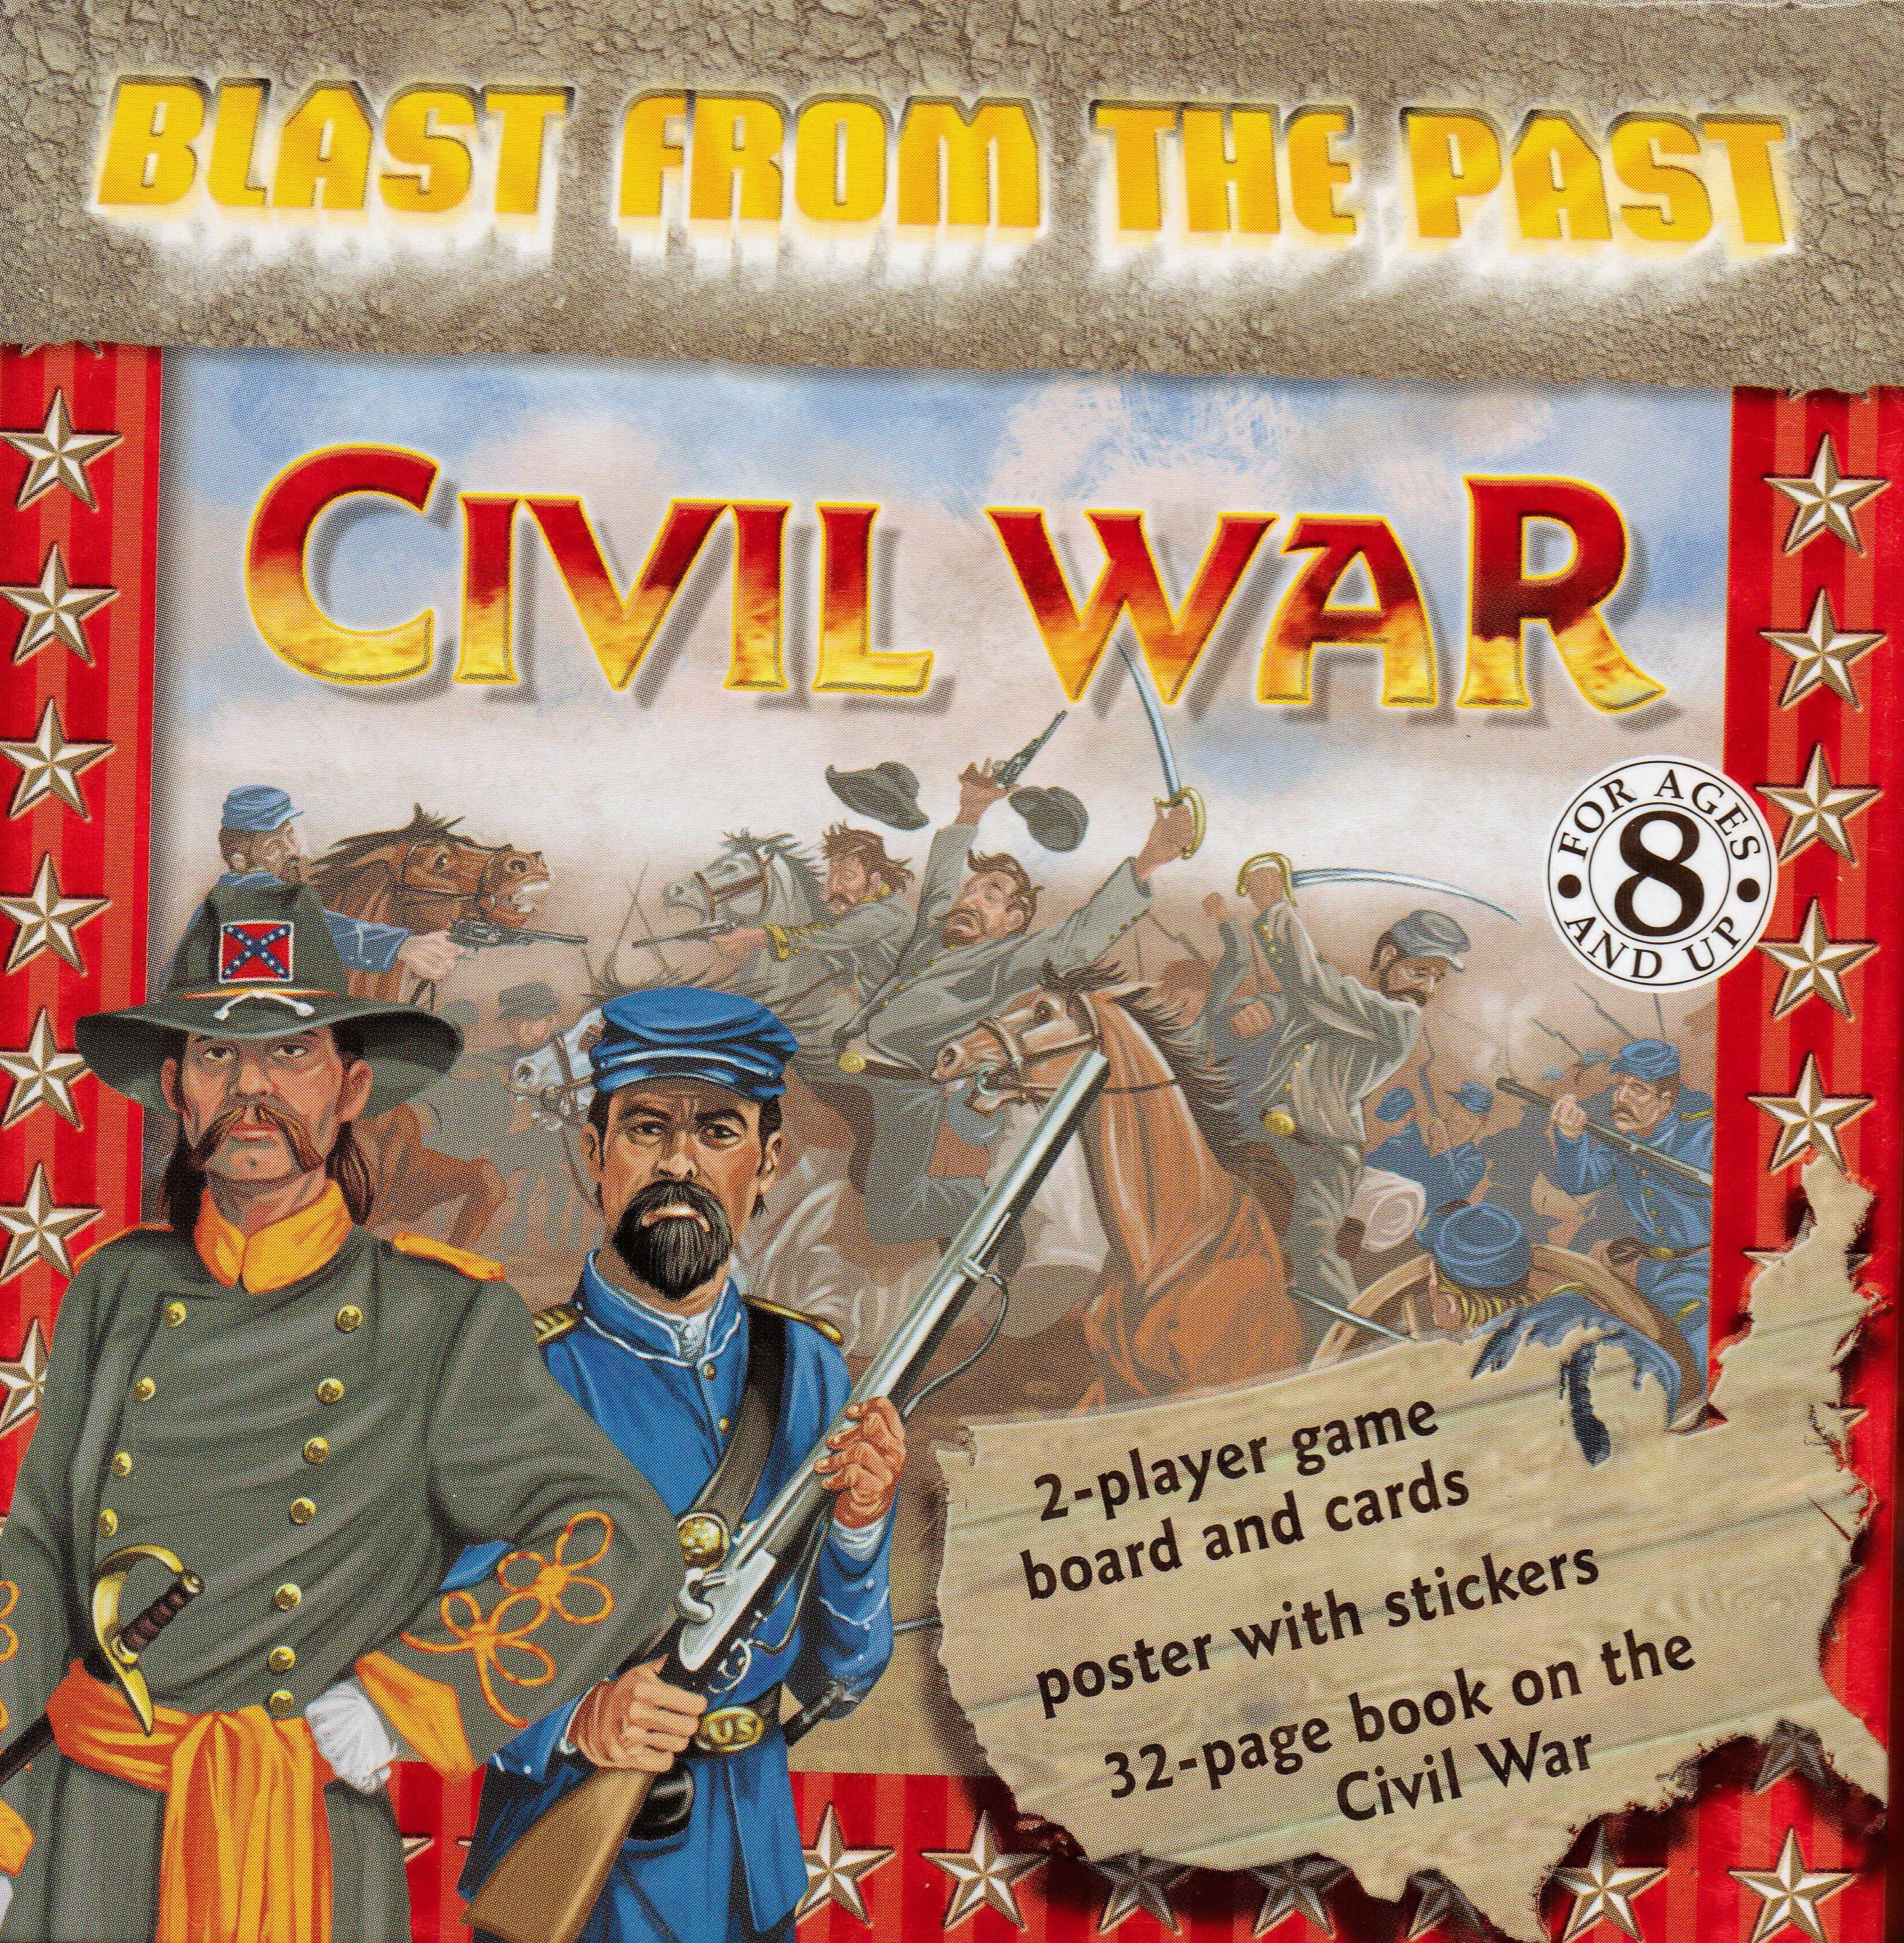 Civil War "Blast from the Past"